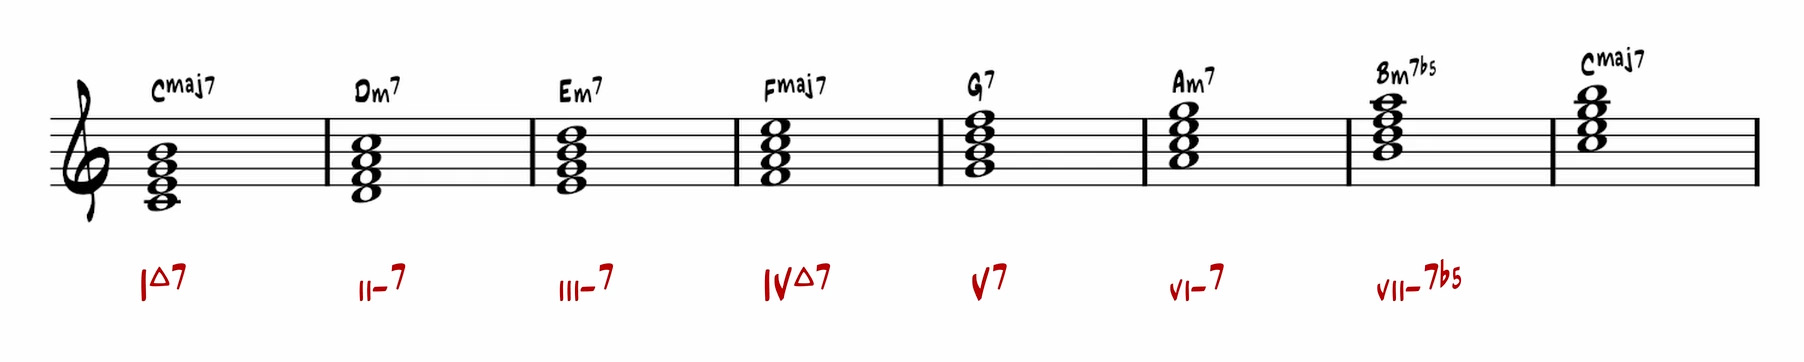 diatonic 7th chords in C major